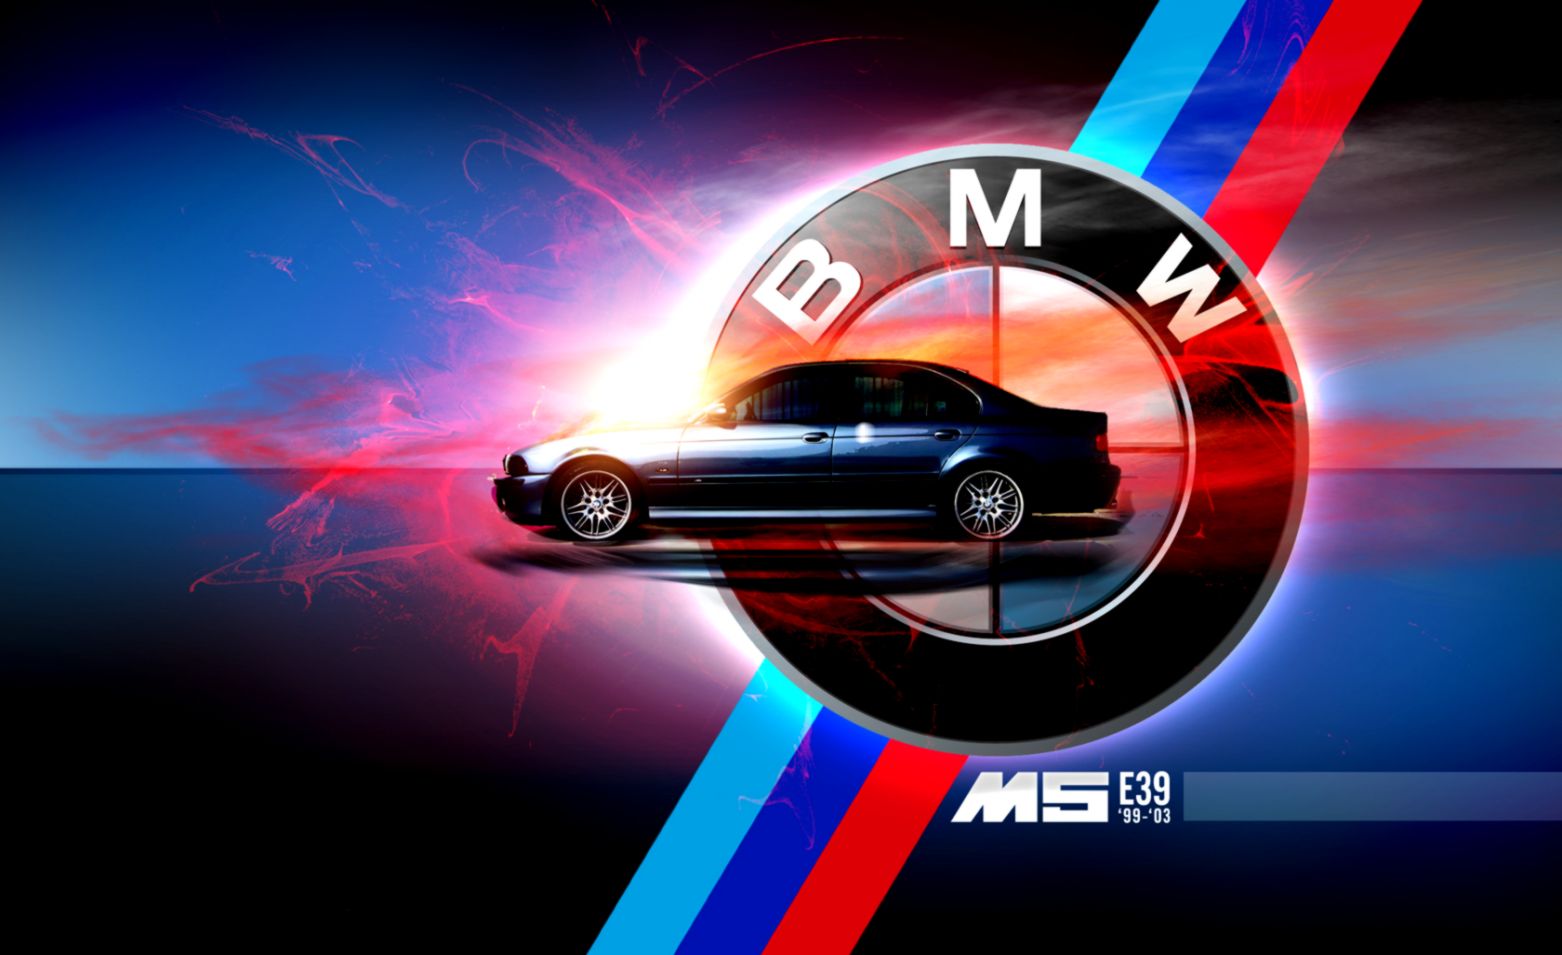 bmw logo wallpaper hd,landfahrzeug,fahrzeug,auto,mittelgroßes auto,stadtauto